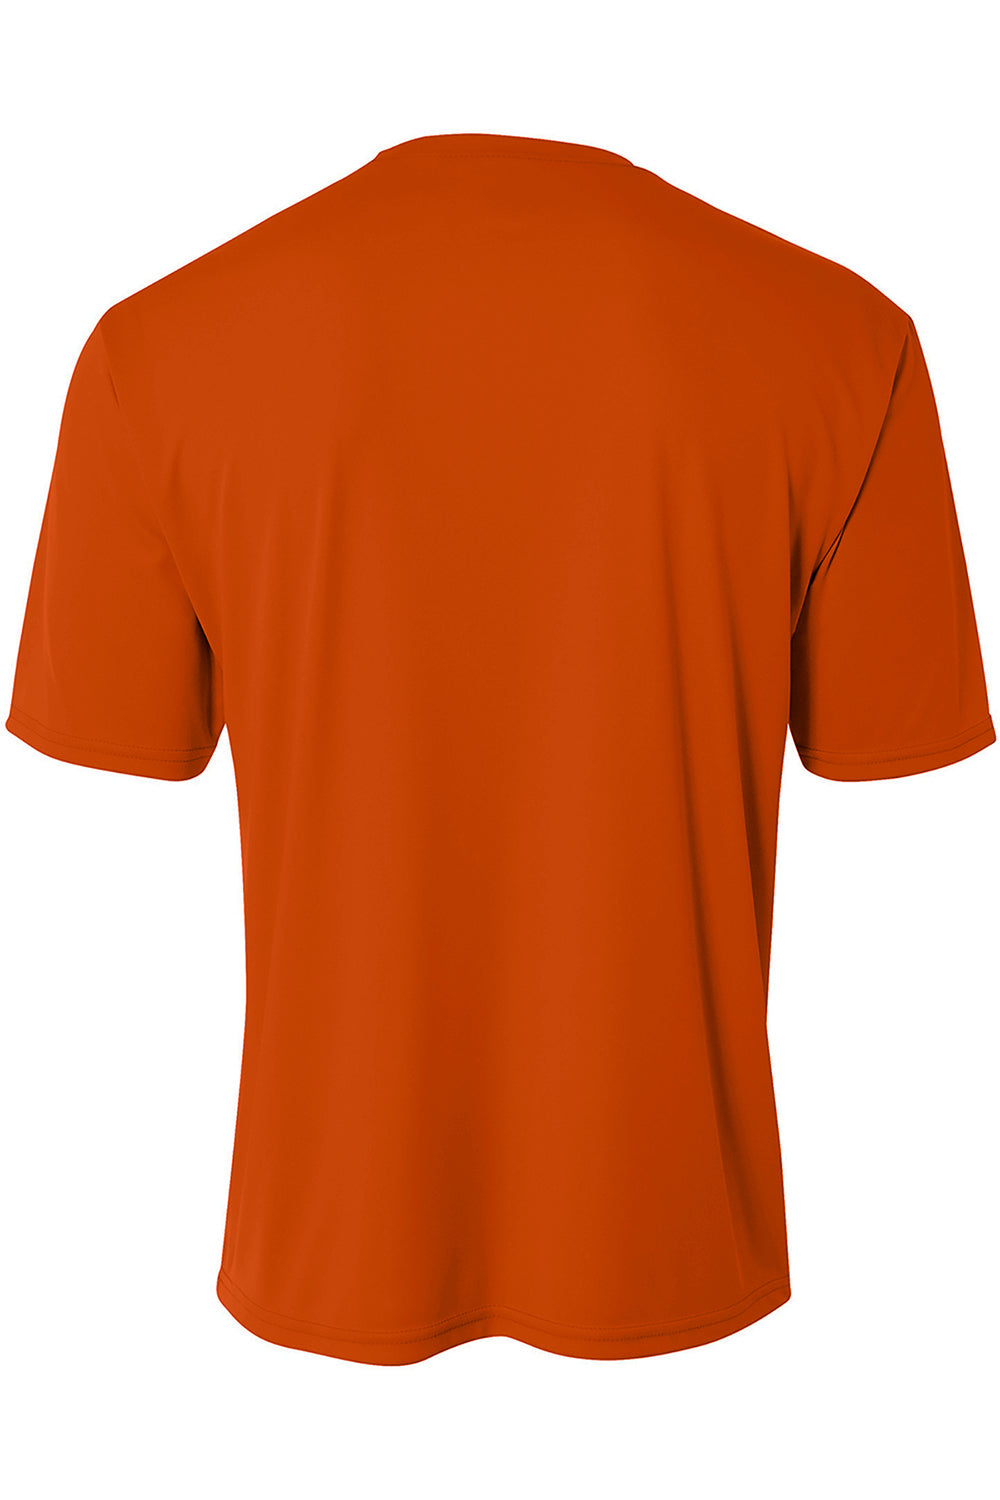 A4 N3402 Mens Sprint Performance Moisture Wicking Short Sleeve Crewneck T-Shirt Athletic Orange Flat Back